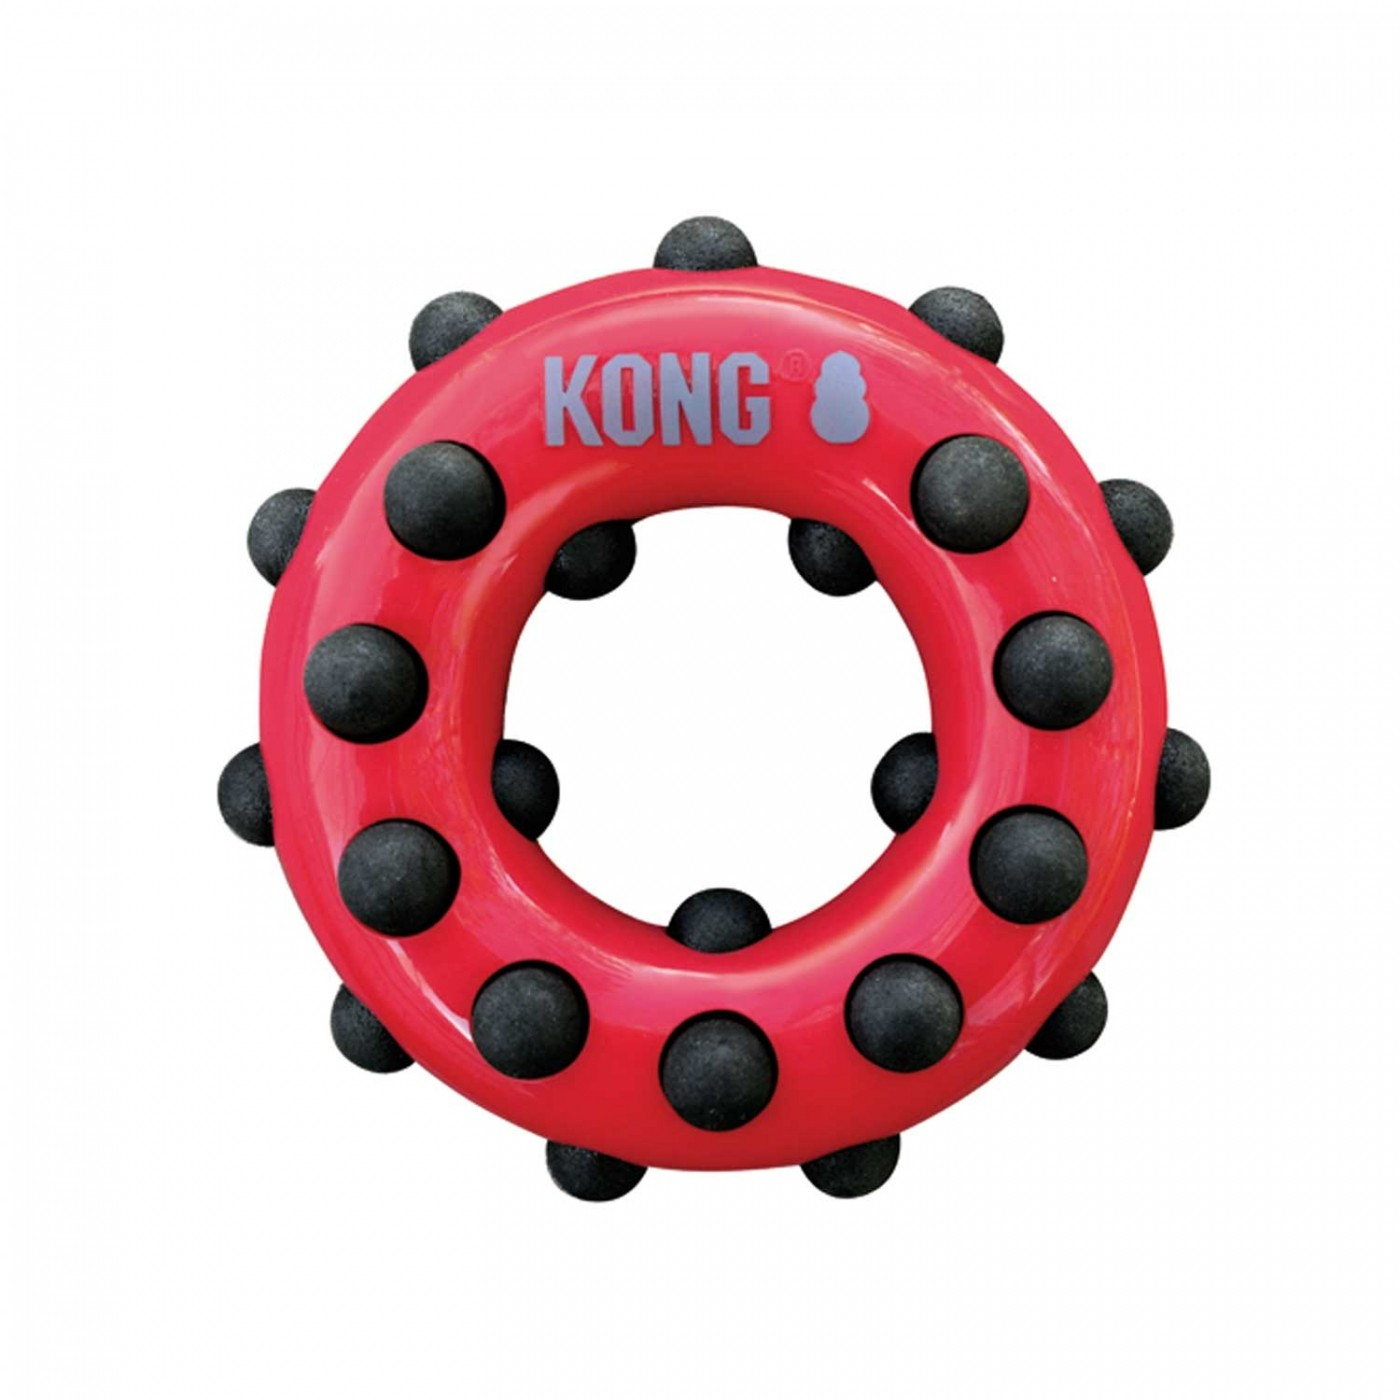 Brinquedo circular dental para cães KONG Dotz™